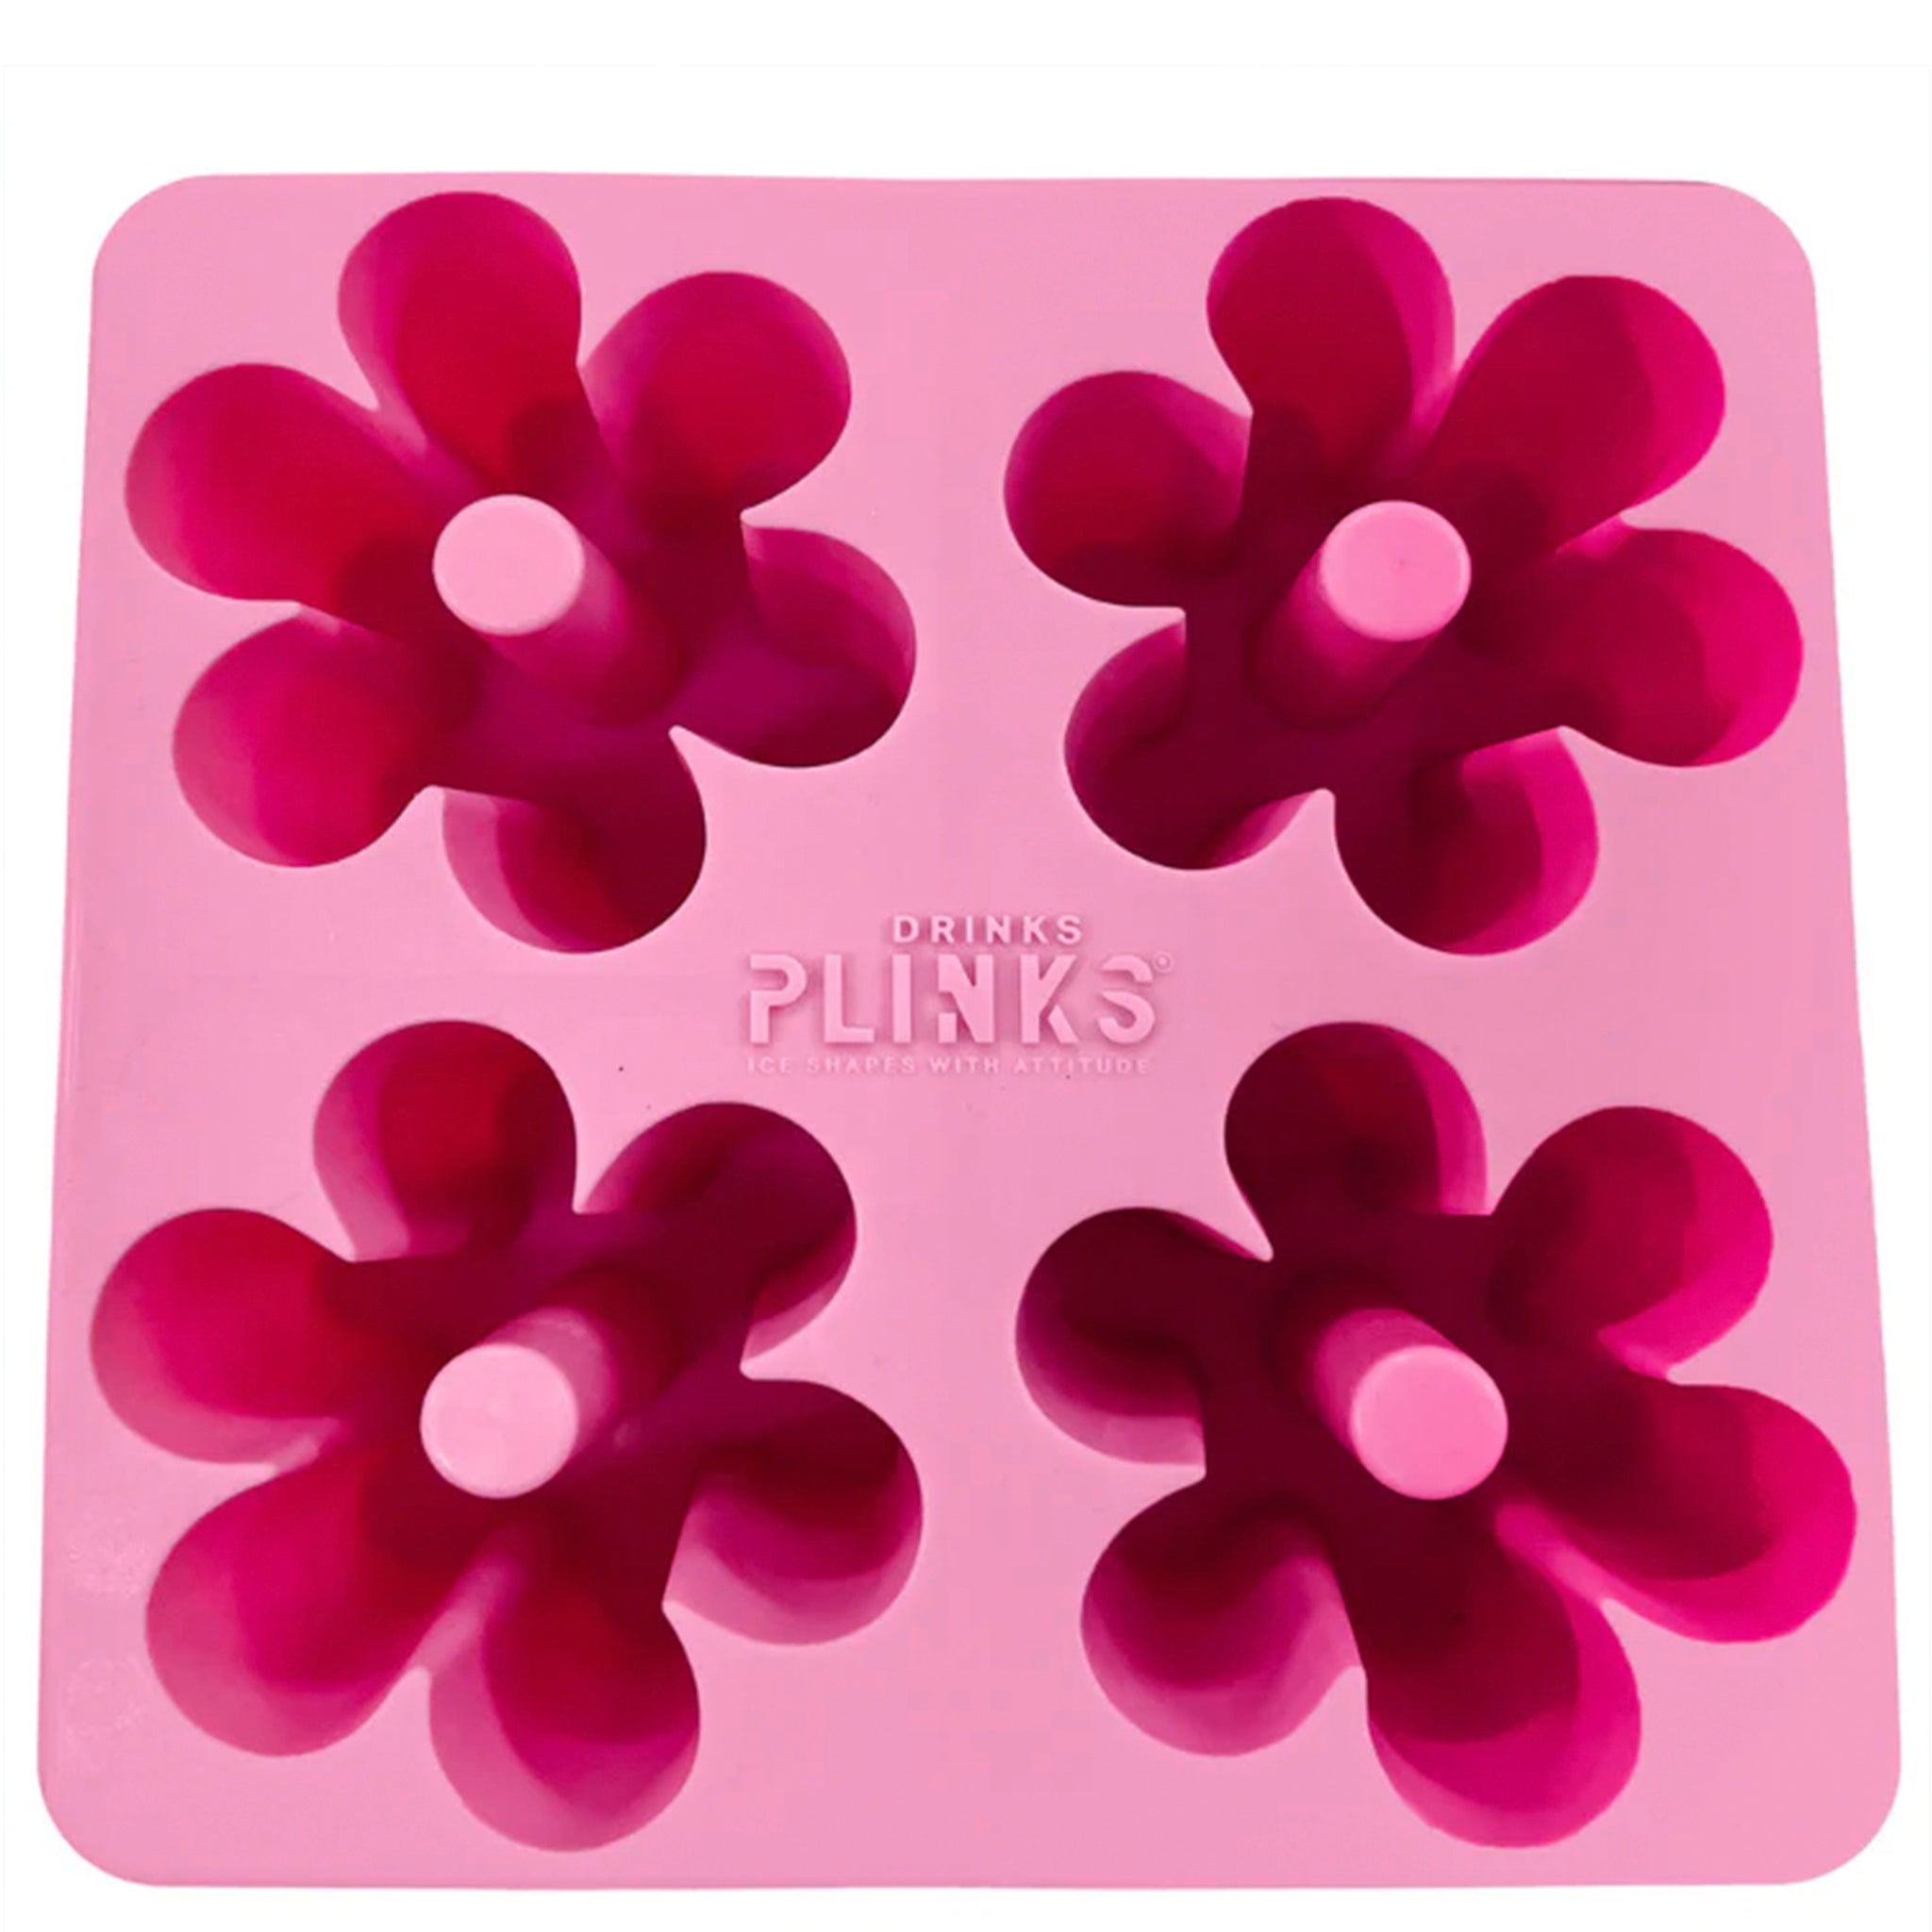 Drinks Plinks Silicone Ice / Baking Tray - Retro Daisy Pink